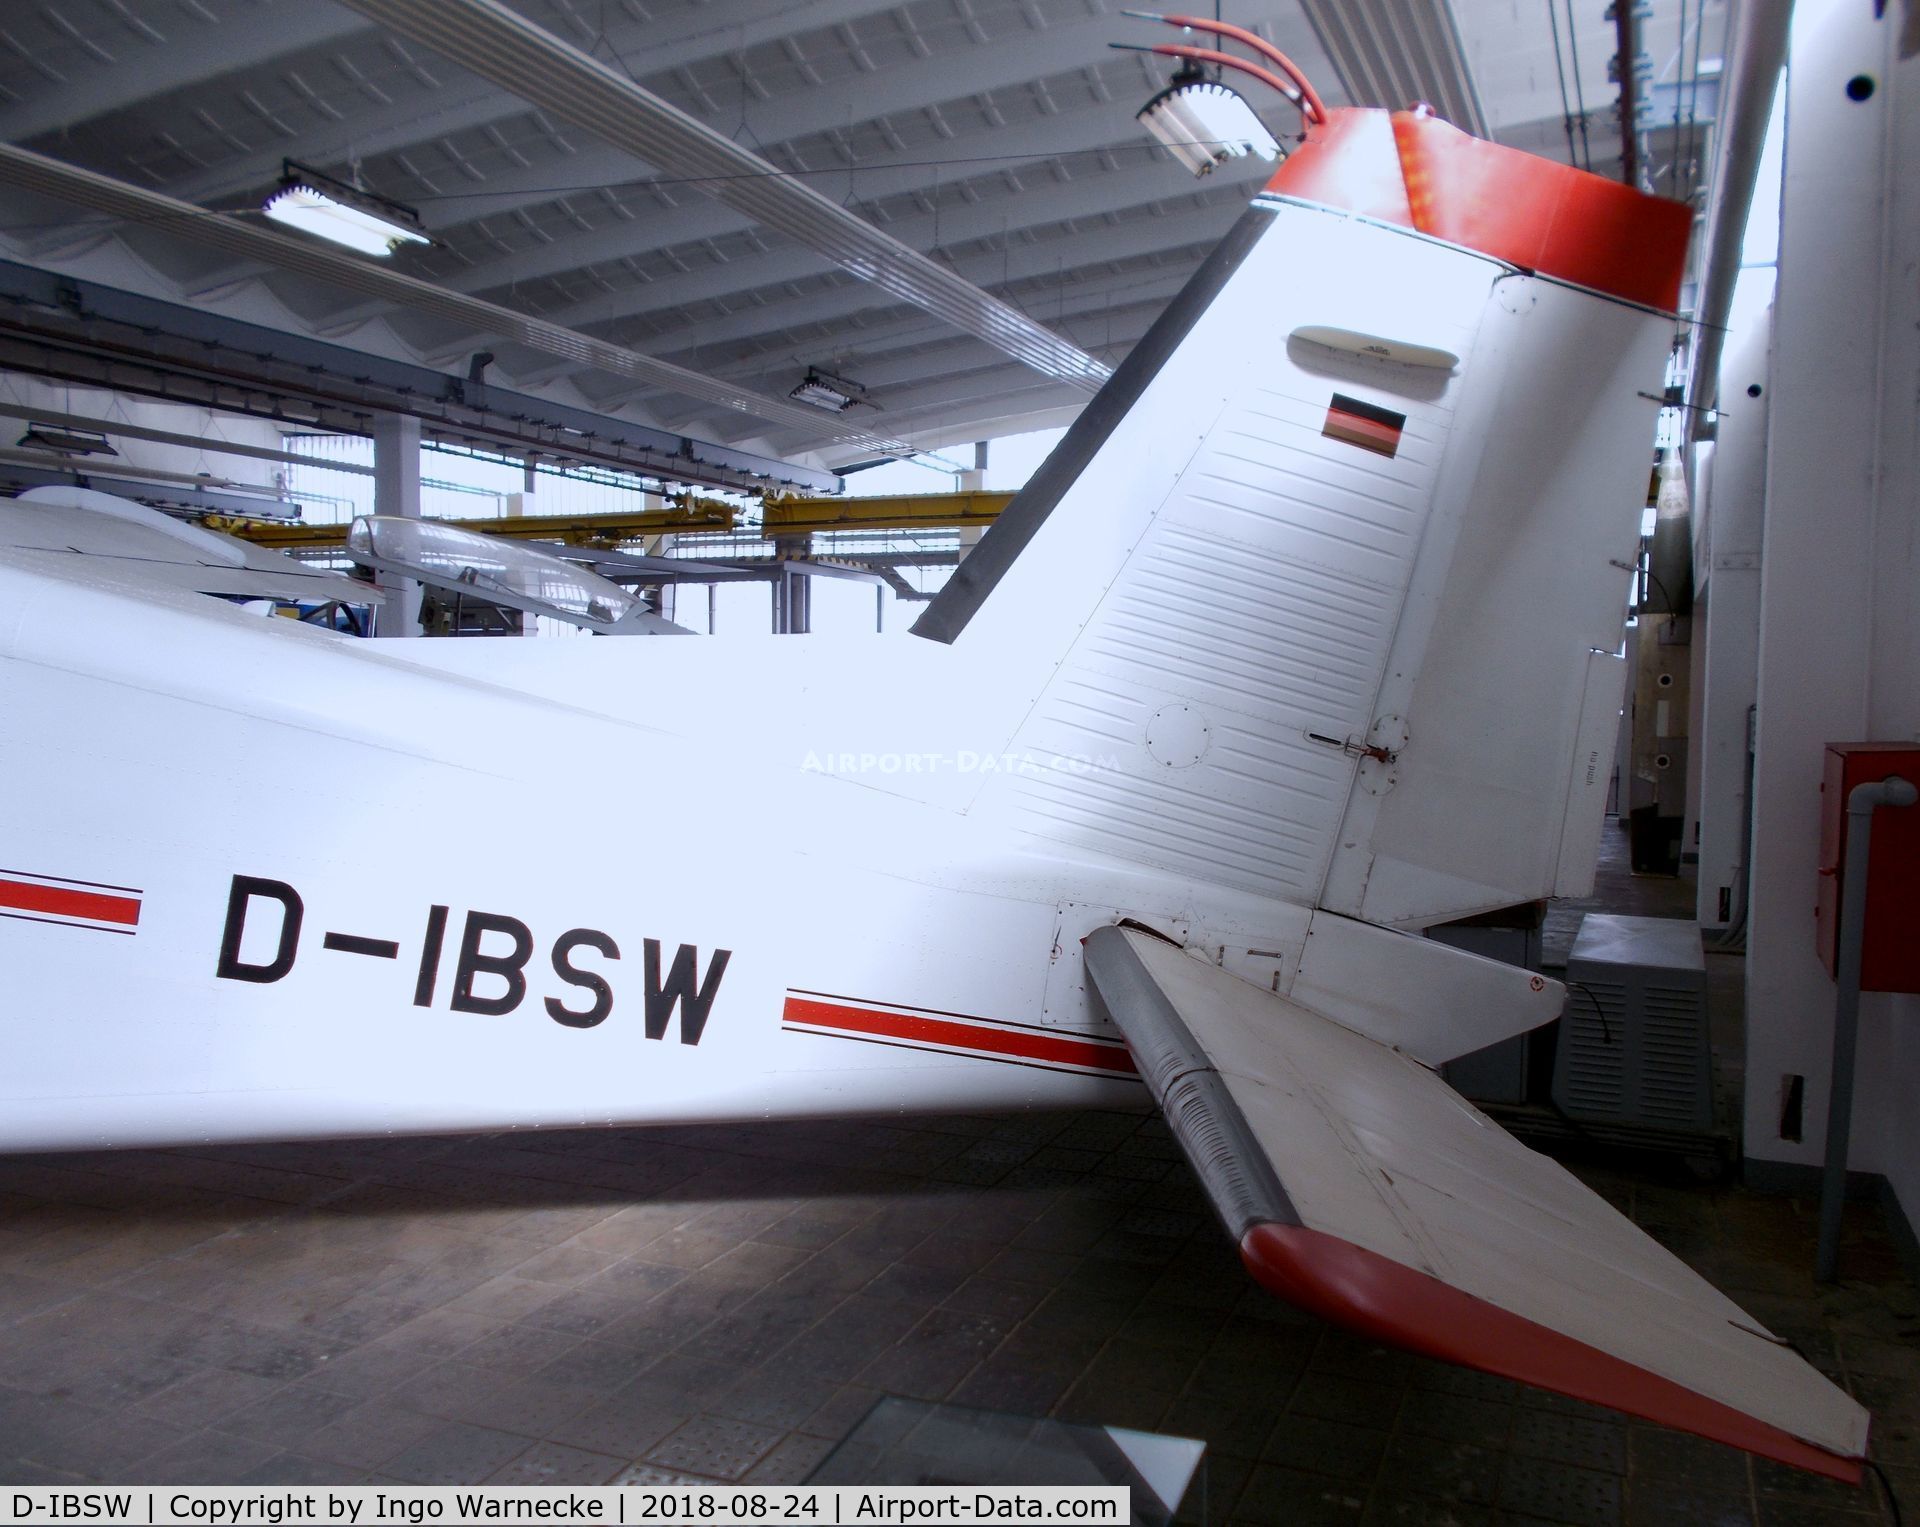 D-IBSW, Dornier Do-28D-1 Skyservant C/N 4033, Dornier Do 28D-1 Skyservant operated by TU Braunschweig (Brunswick Technical University) as research aircraft until 1993, now at the Museum für Luftfahrt u. Technik at Wernigerode